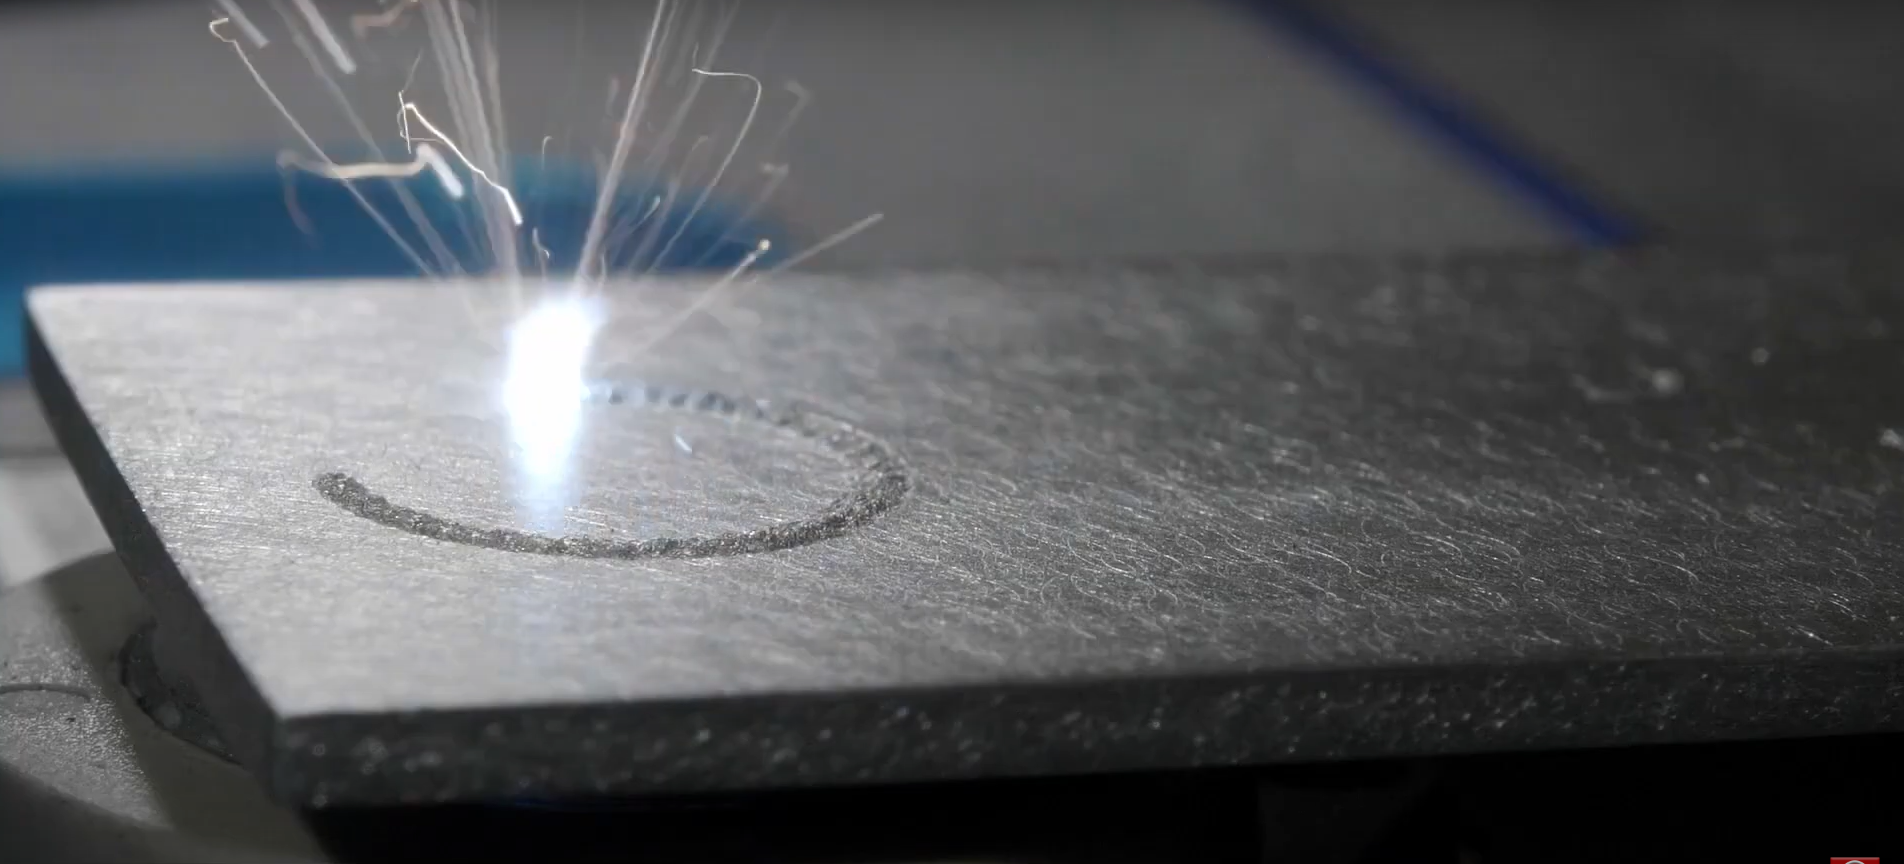 Fiber laser manual welding 